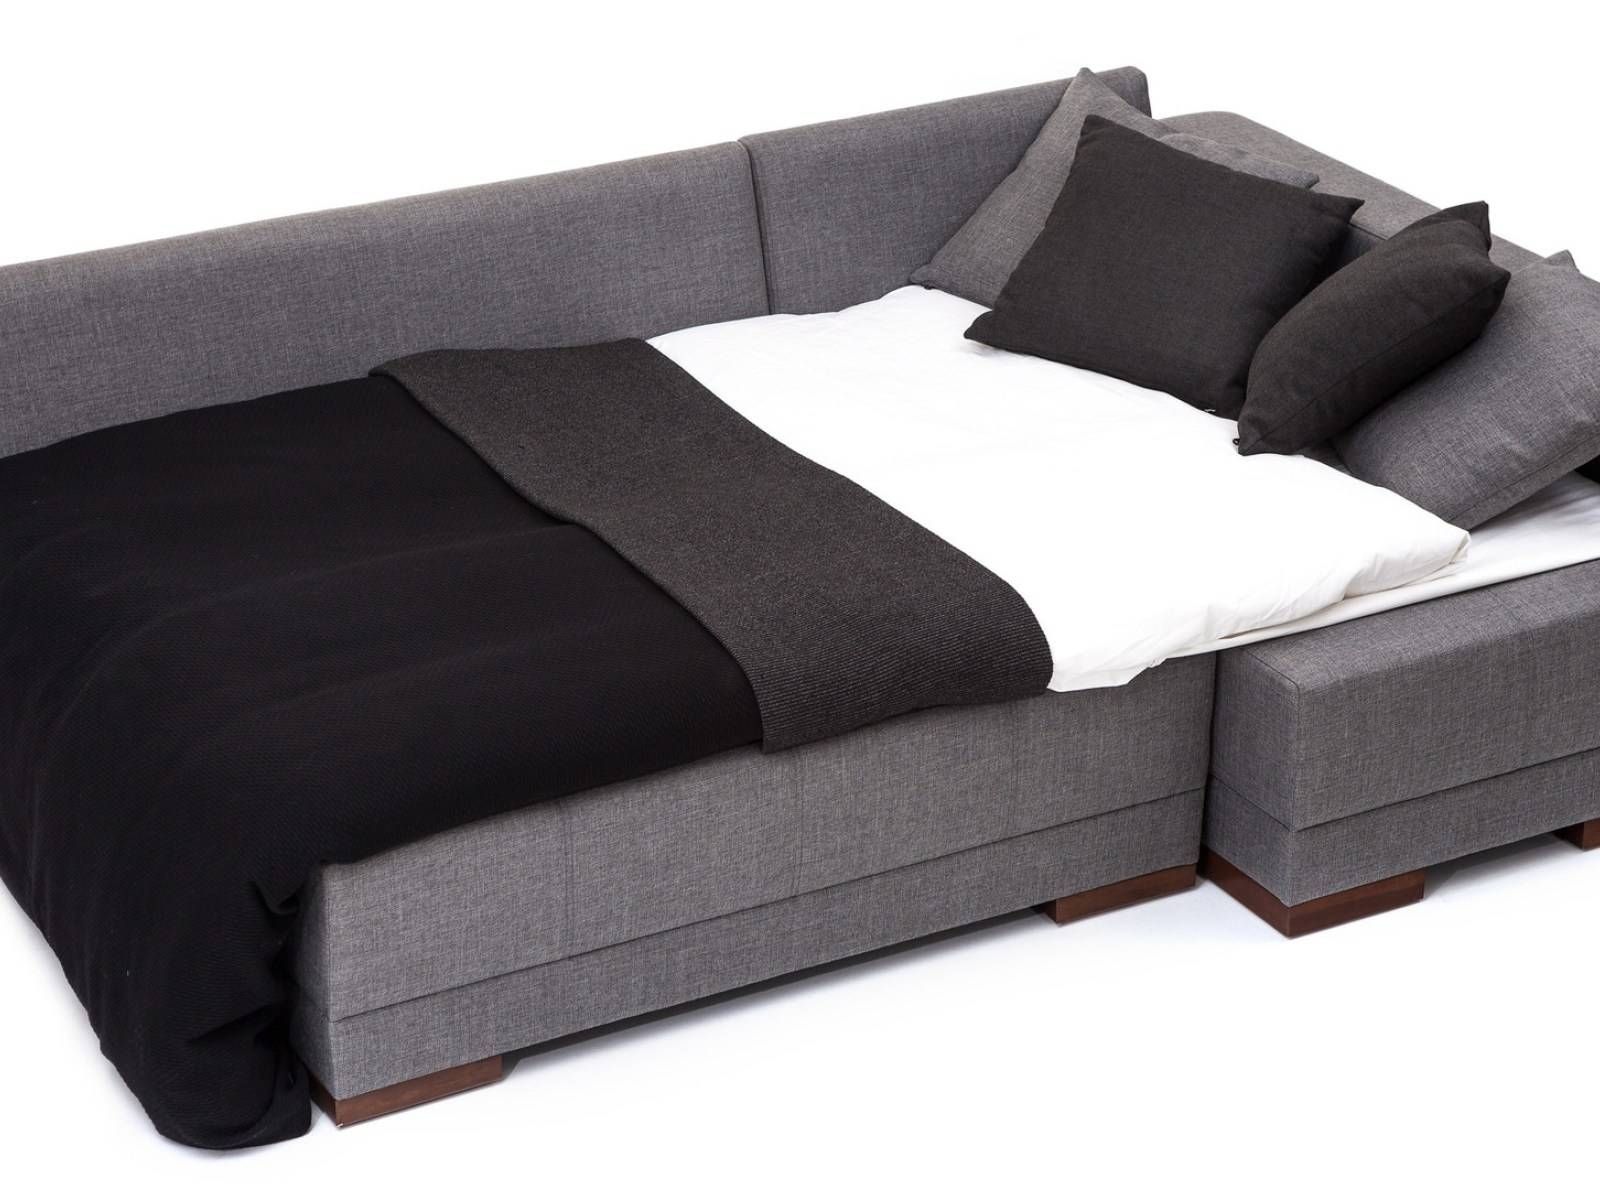 ▻ Sofa : 36 Beautiful Manstad Sofa Bed With Storage From Ikea 99 Regarding Manstad Sofa Bed With Storage From Ikea (Photo 22 of 25)